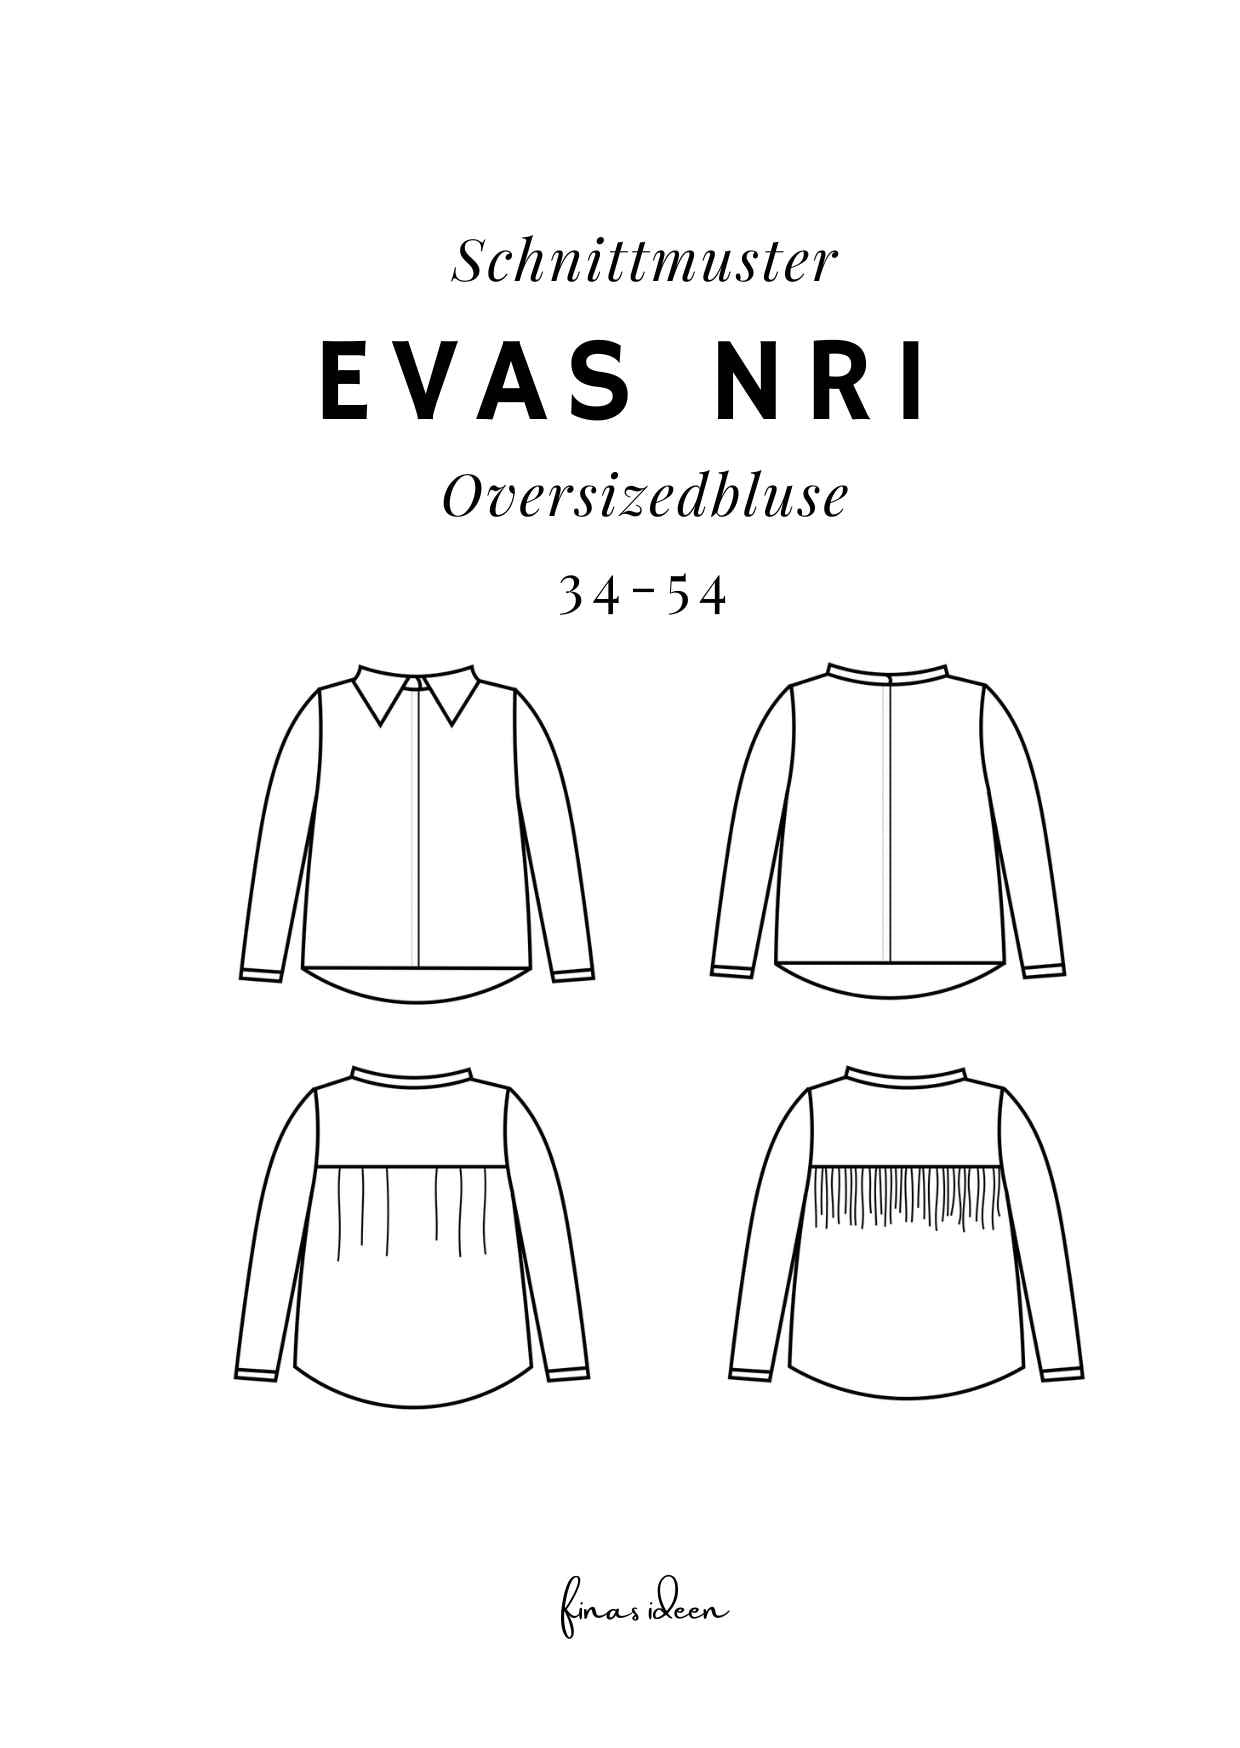 Evas Nr.1 - Oversizedbluse